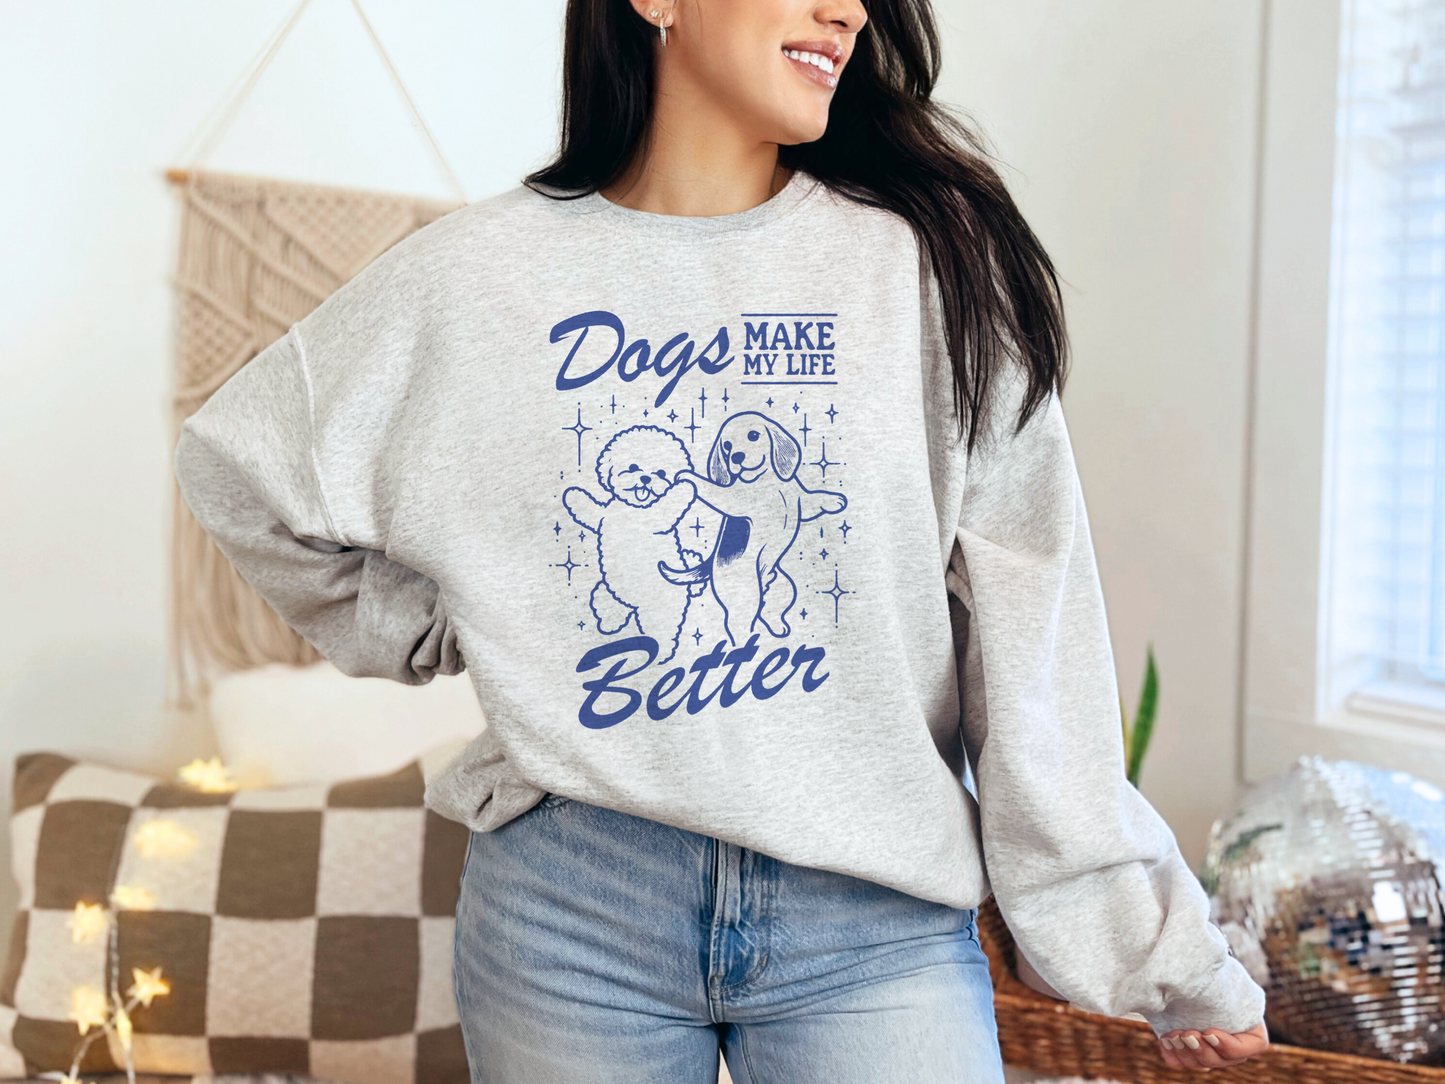 Dogs Make My Life Better Graphic T-Shirt or Sweatshirt